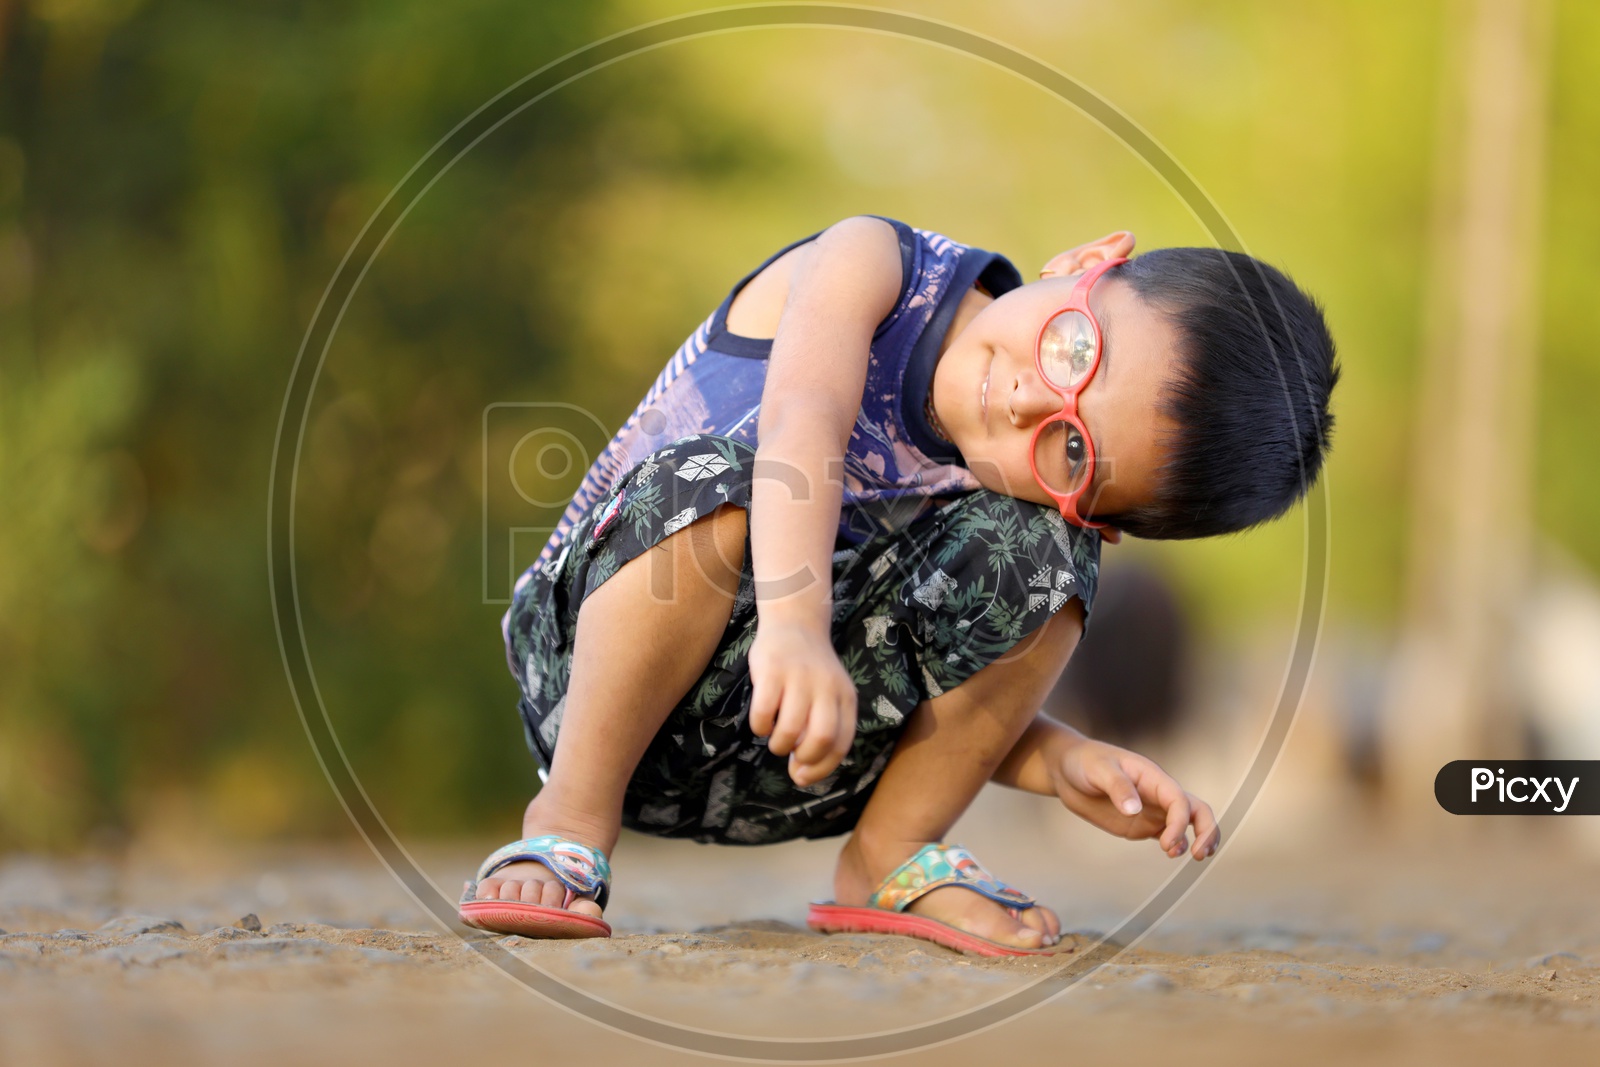 Indian Child on Eyeglass